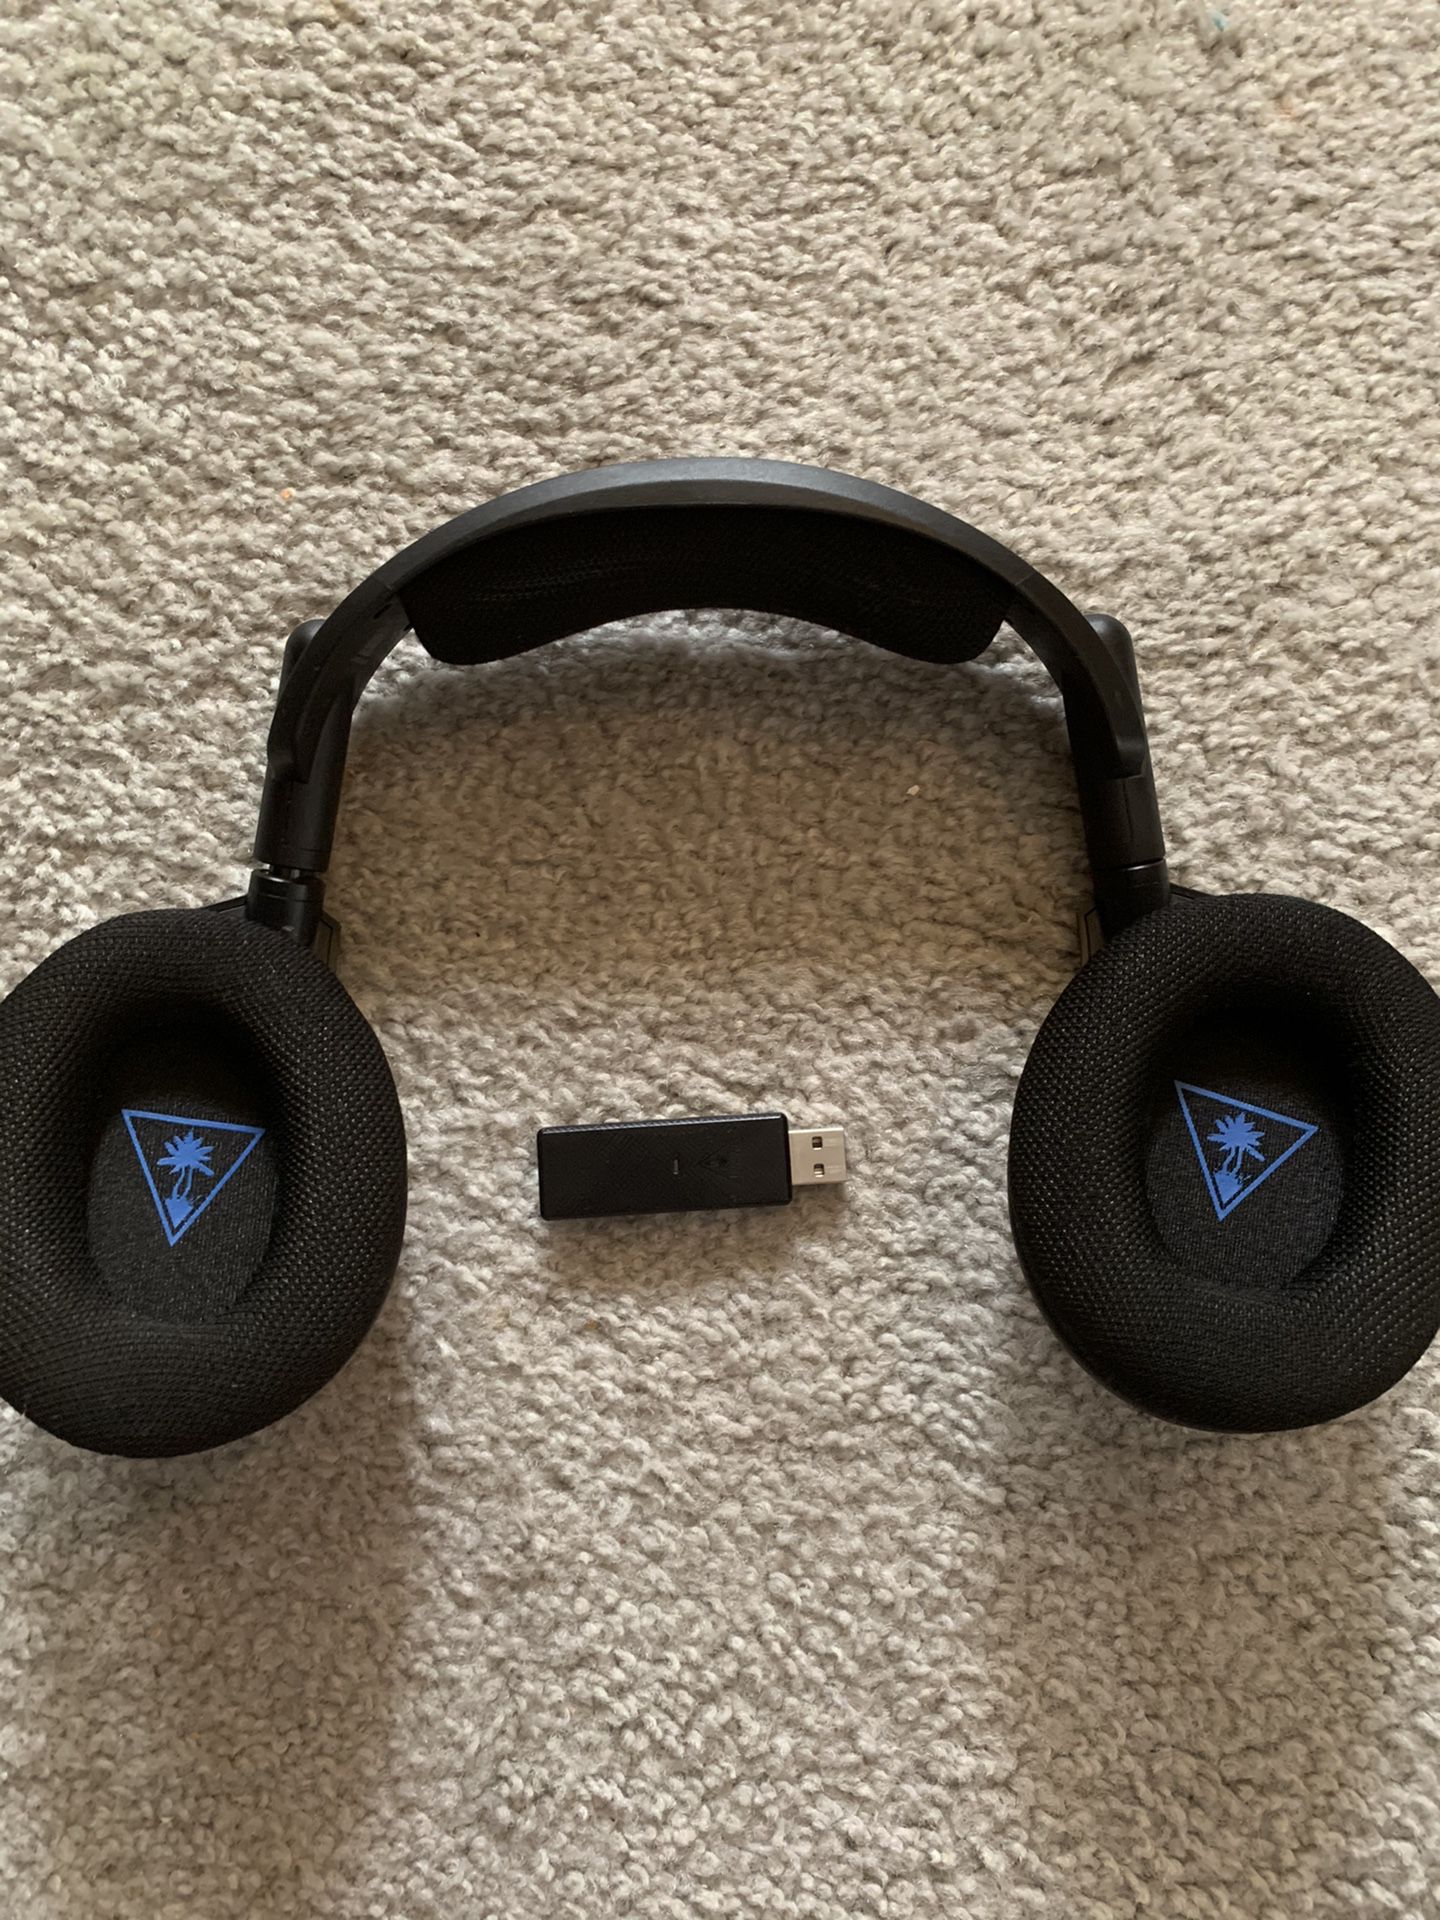 Turtle Beach Bluetooth / Gaming Headphones